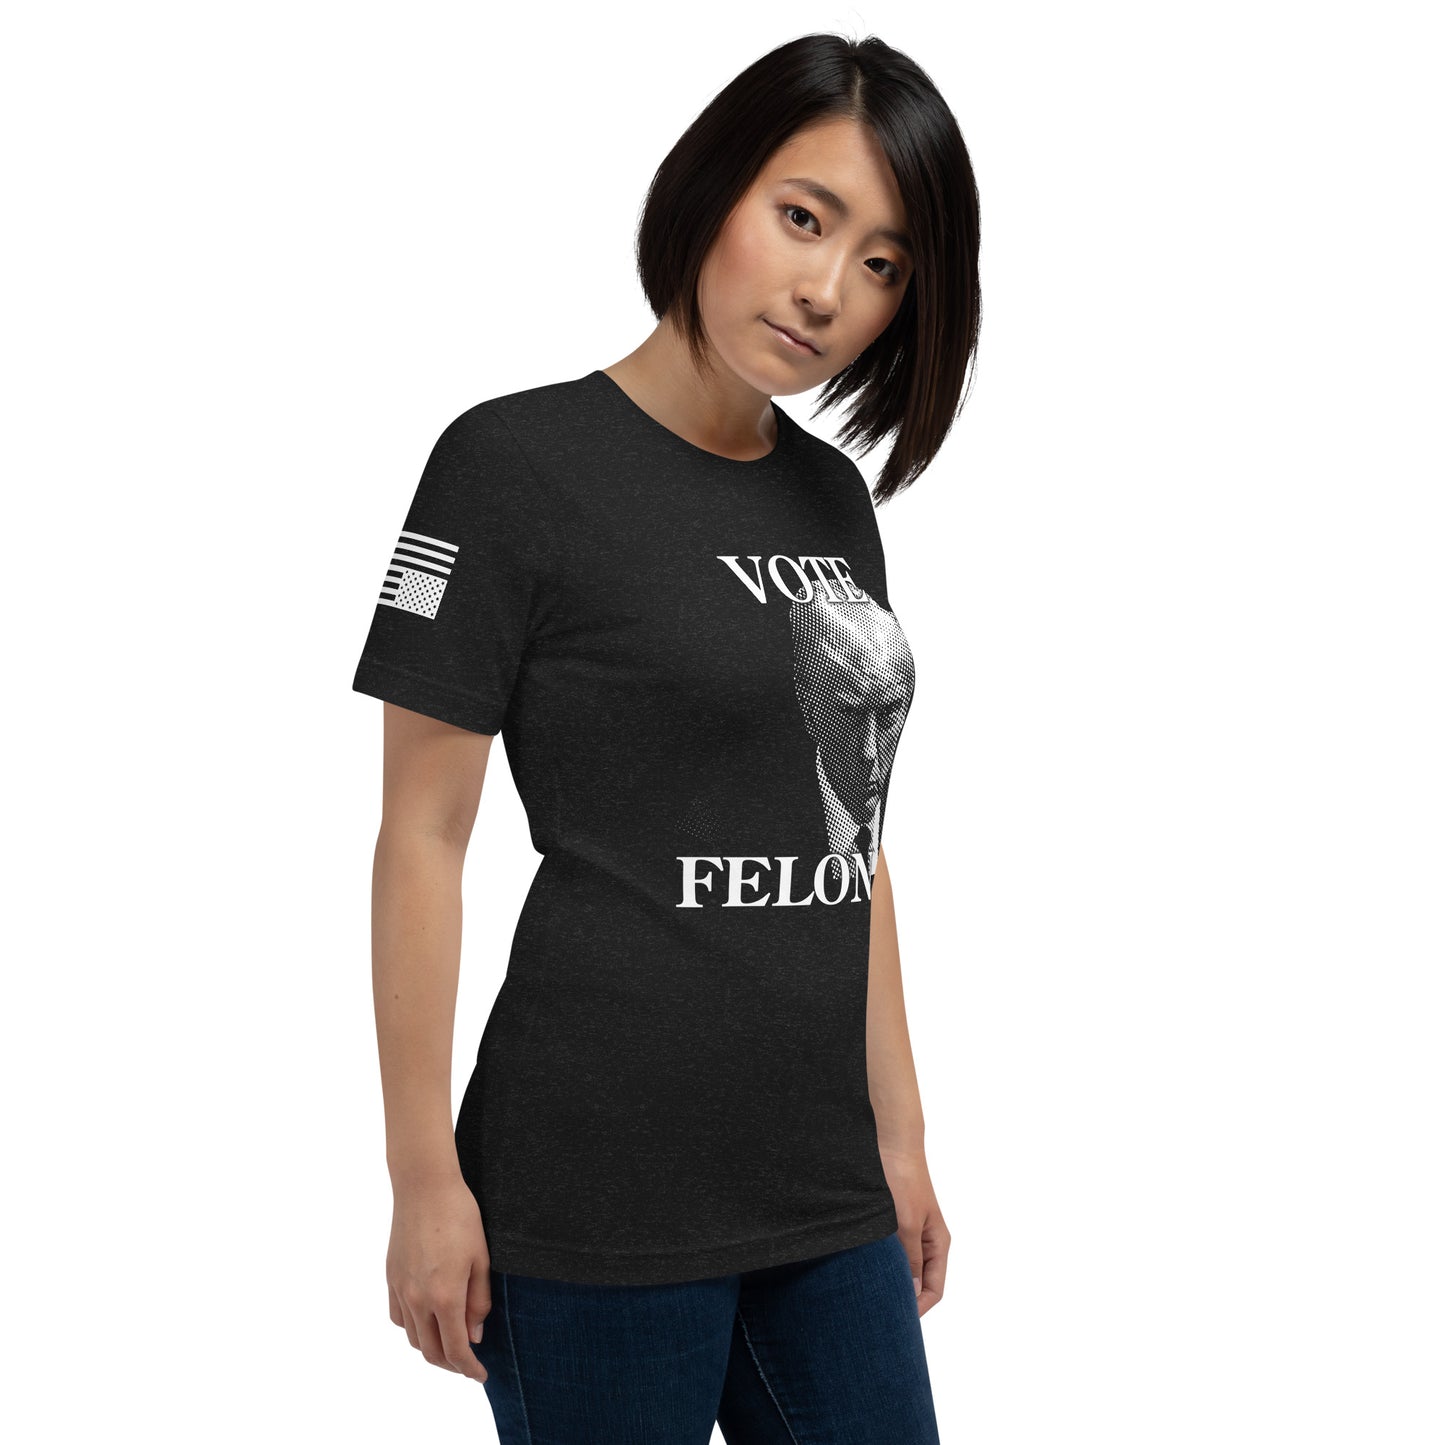 Women's "VOTE FELON 47" T-shirt